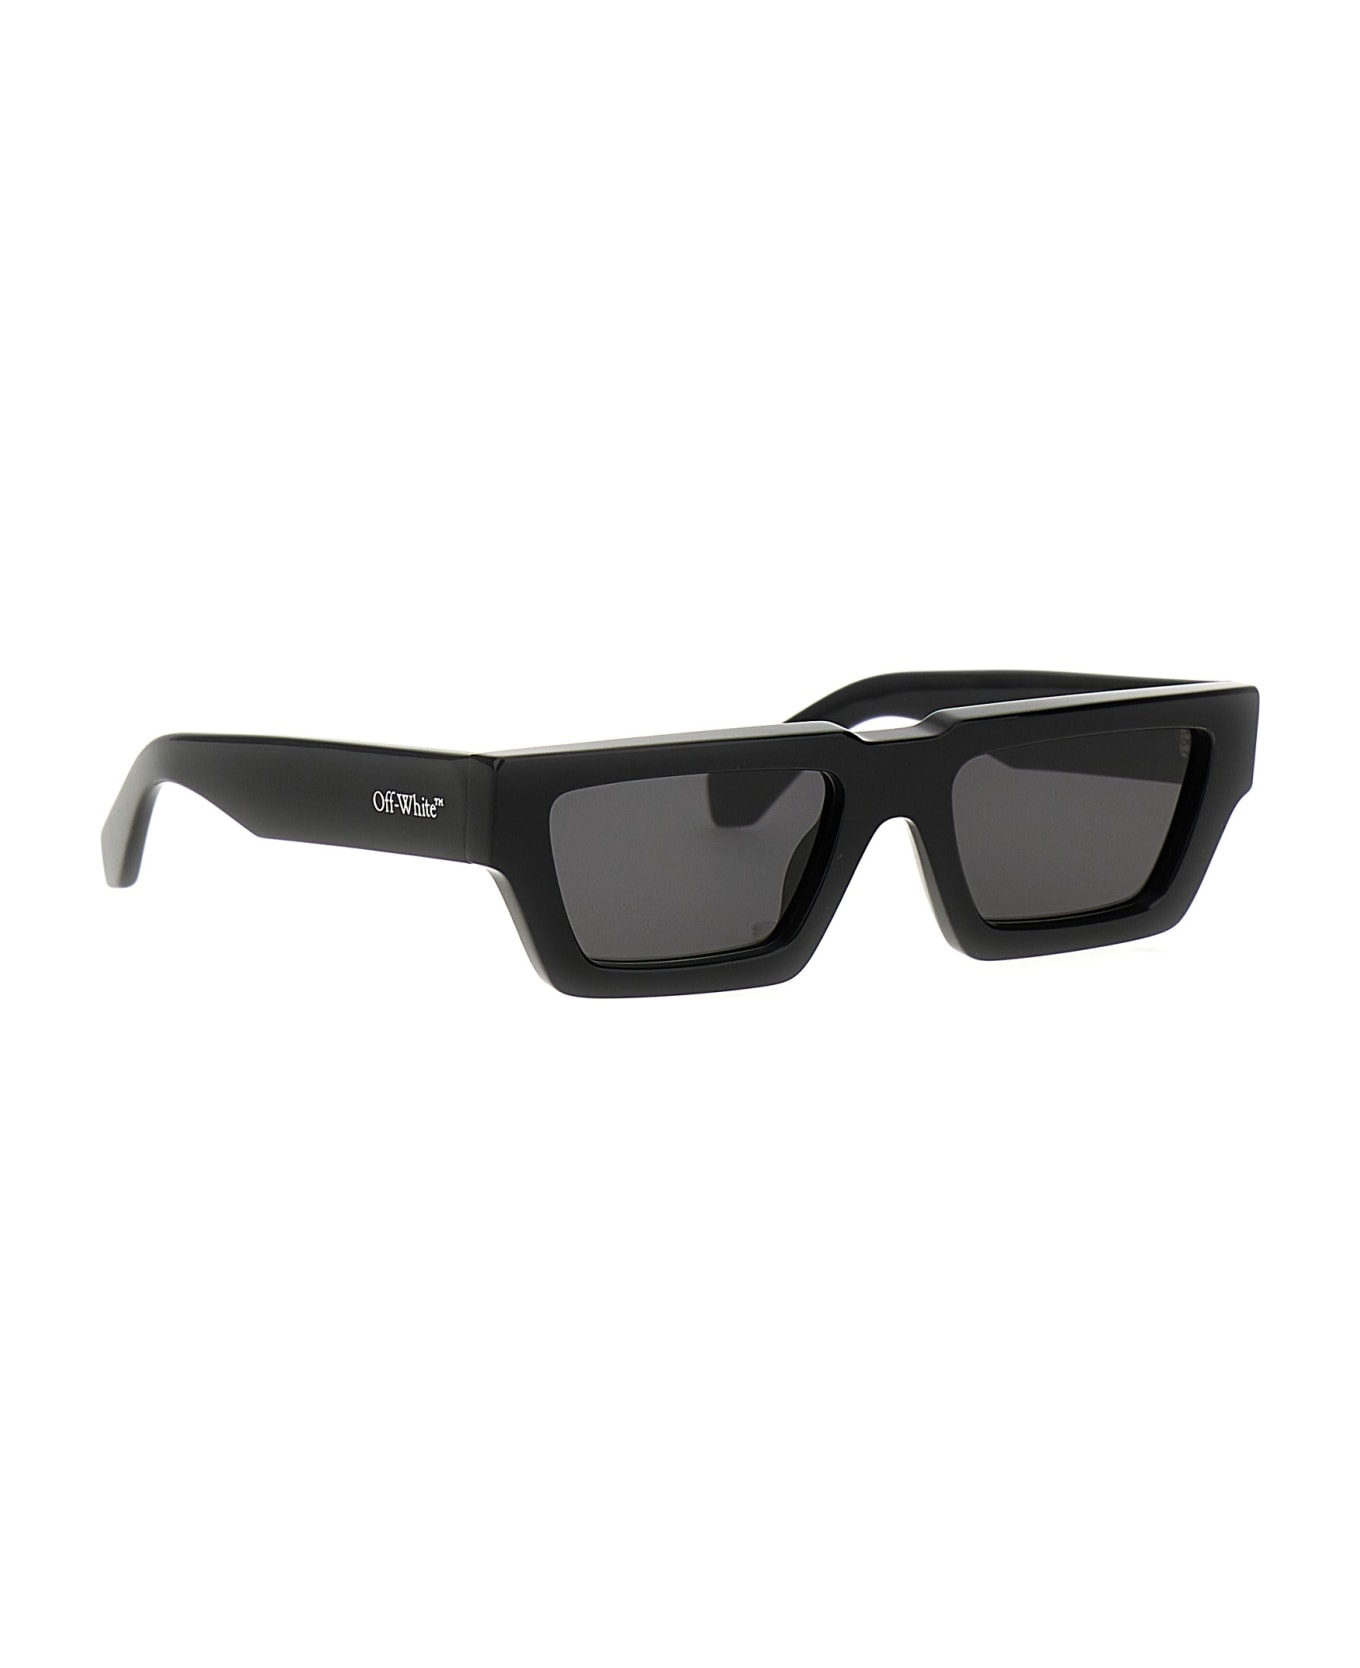 Off-White Manchester Sunglasses - Black サングラス